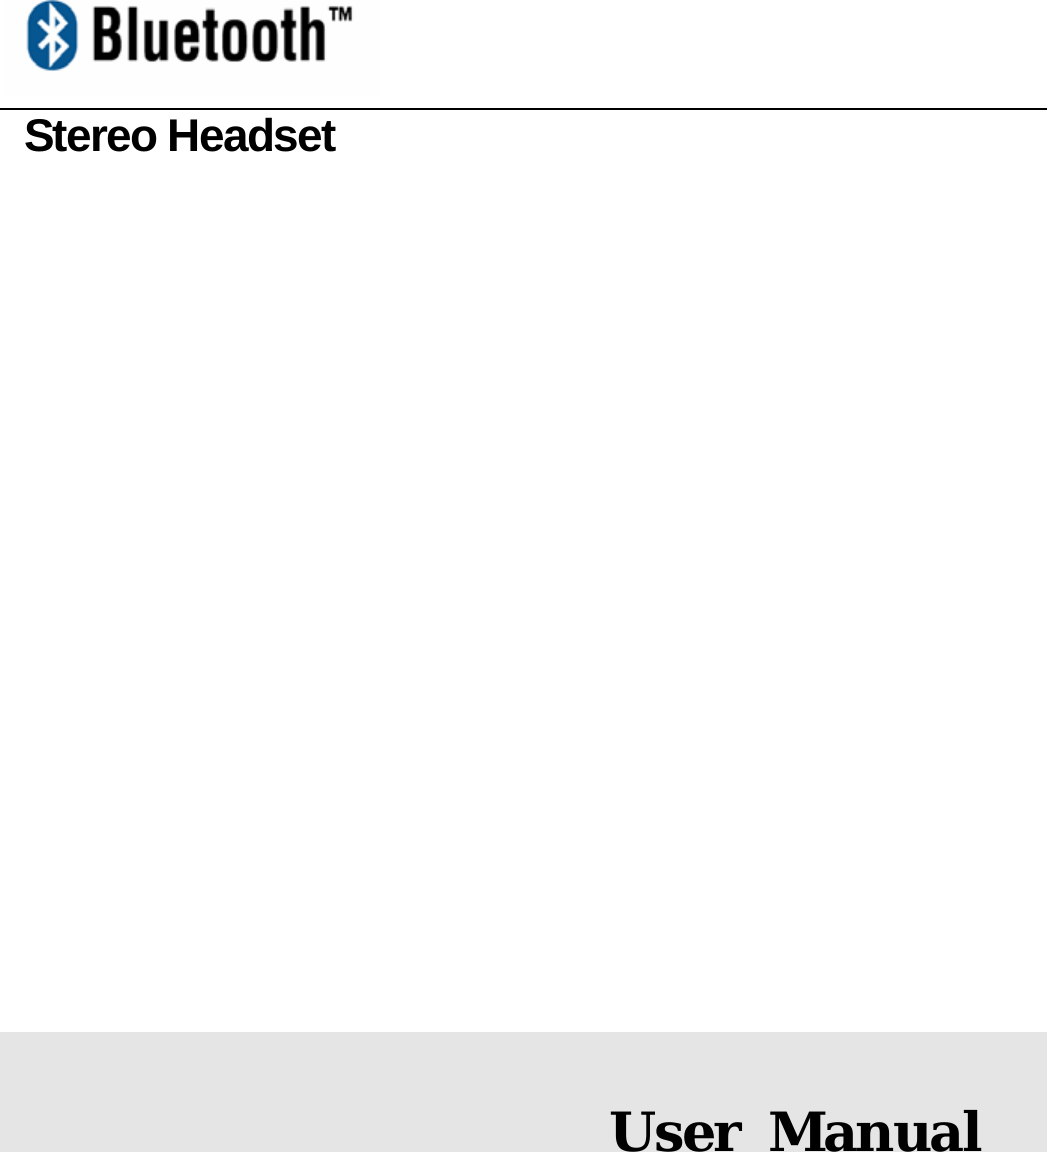  Stereo Headset                  User Manual 1.0 